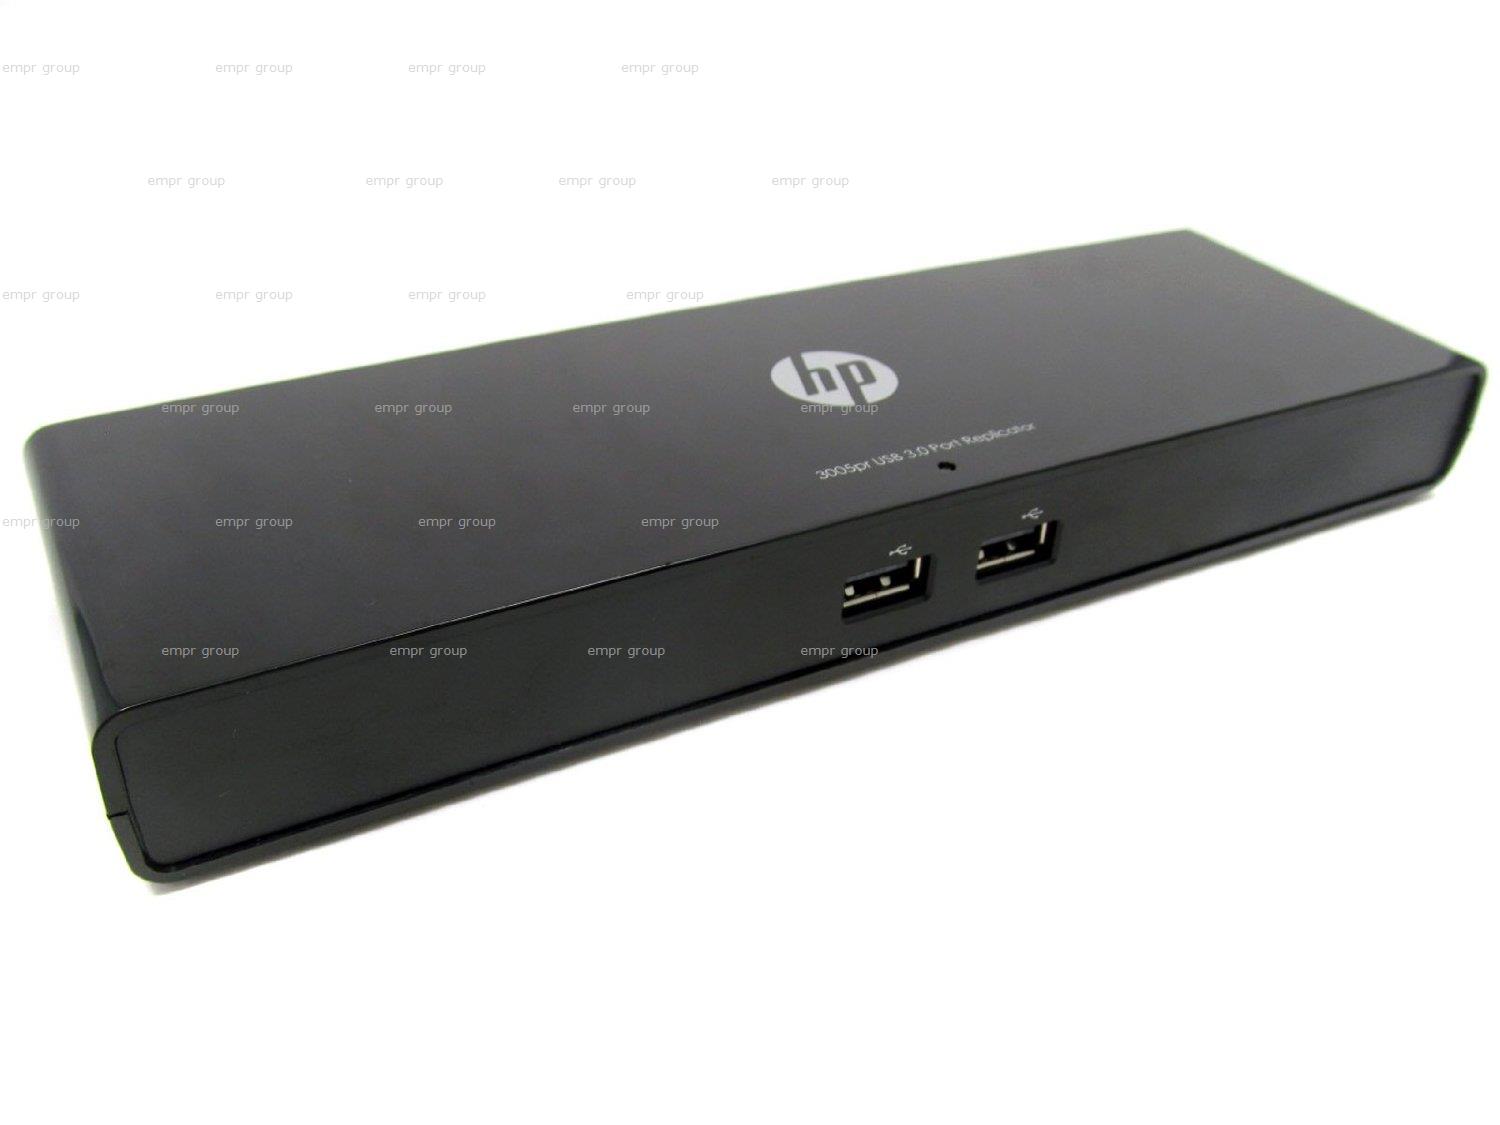 HP EliteBook 820 G1 Laptop (H9R80EC) Port Replicator 690650-001